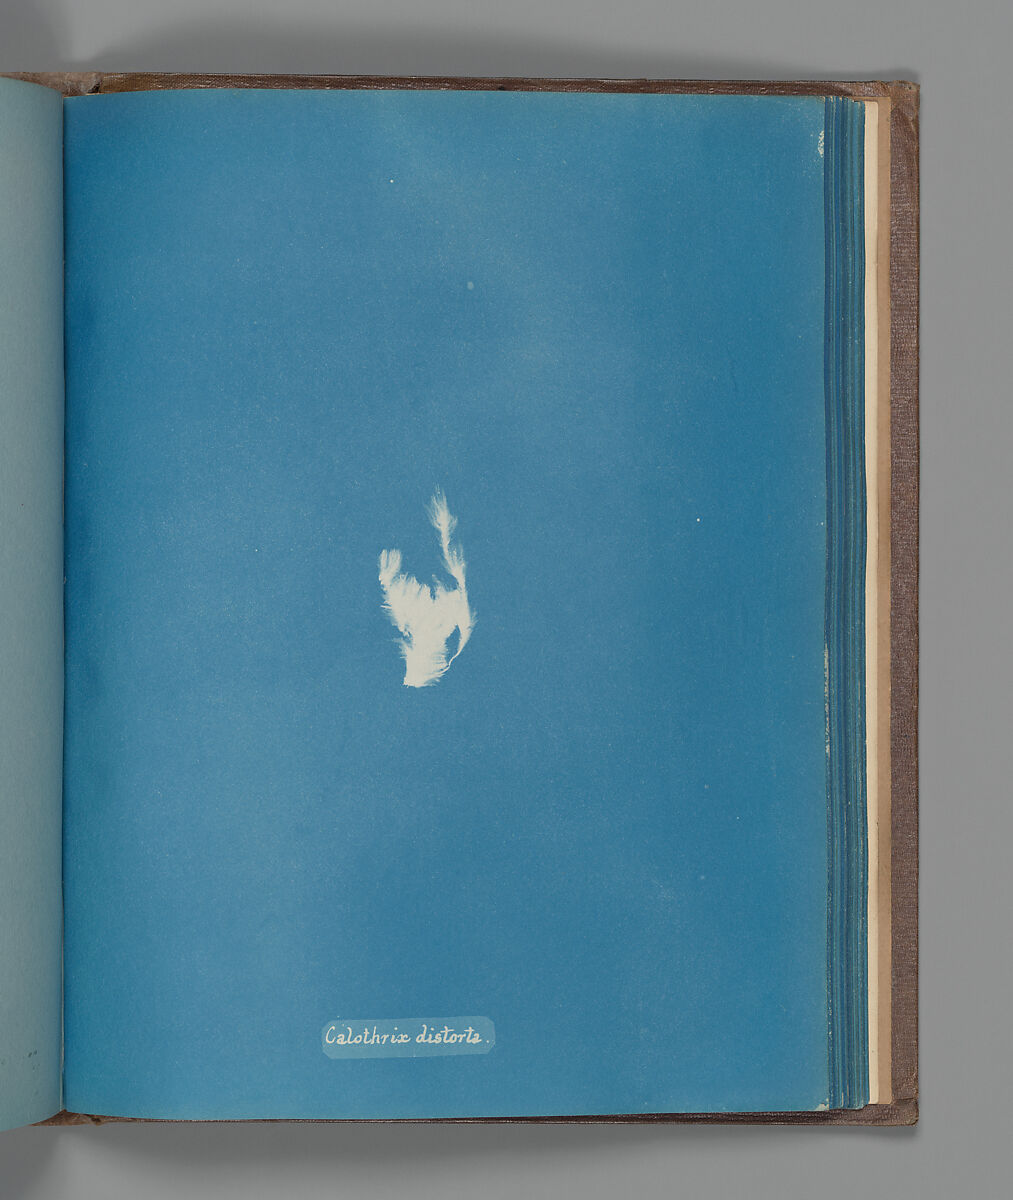 Calothrix distorta, Anna Atkins (British, 1799–1871), Cyanotype 